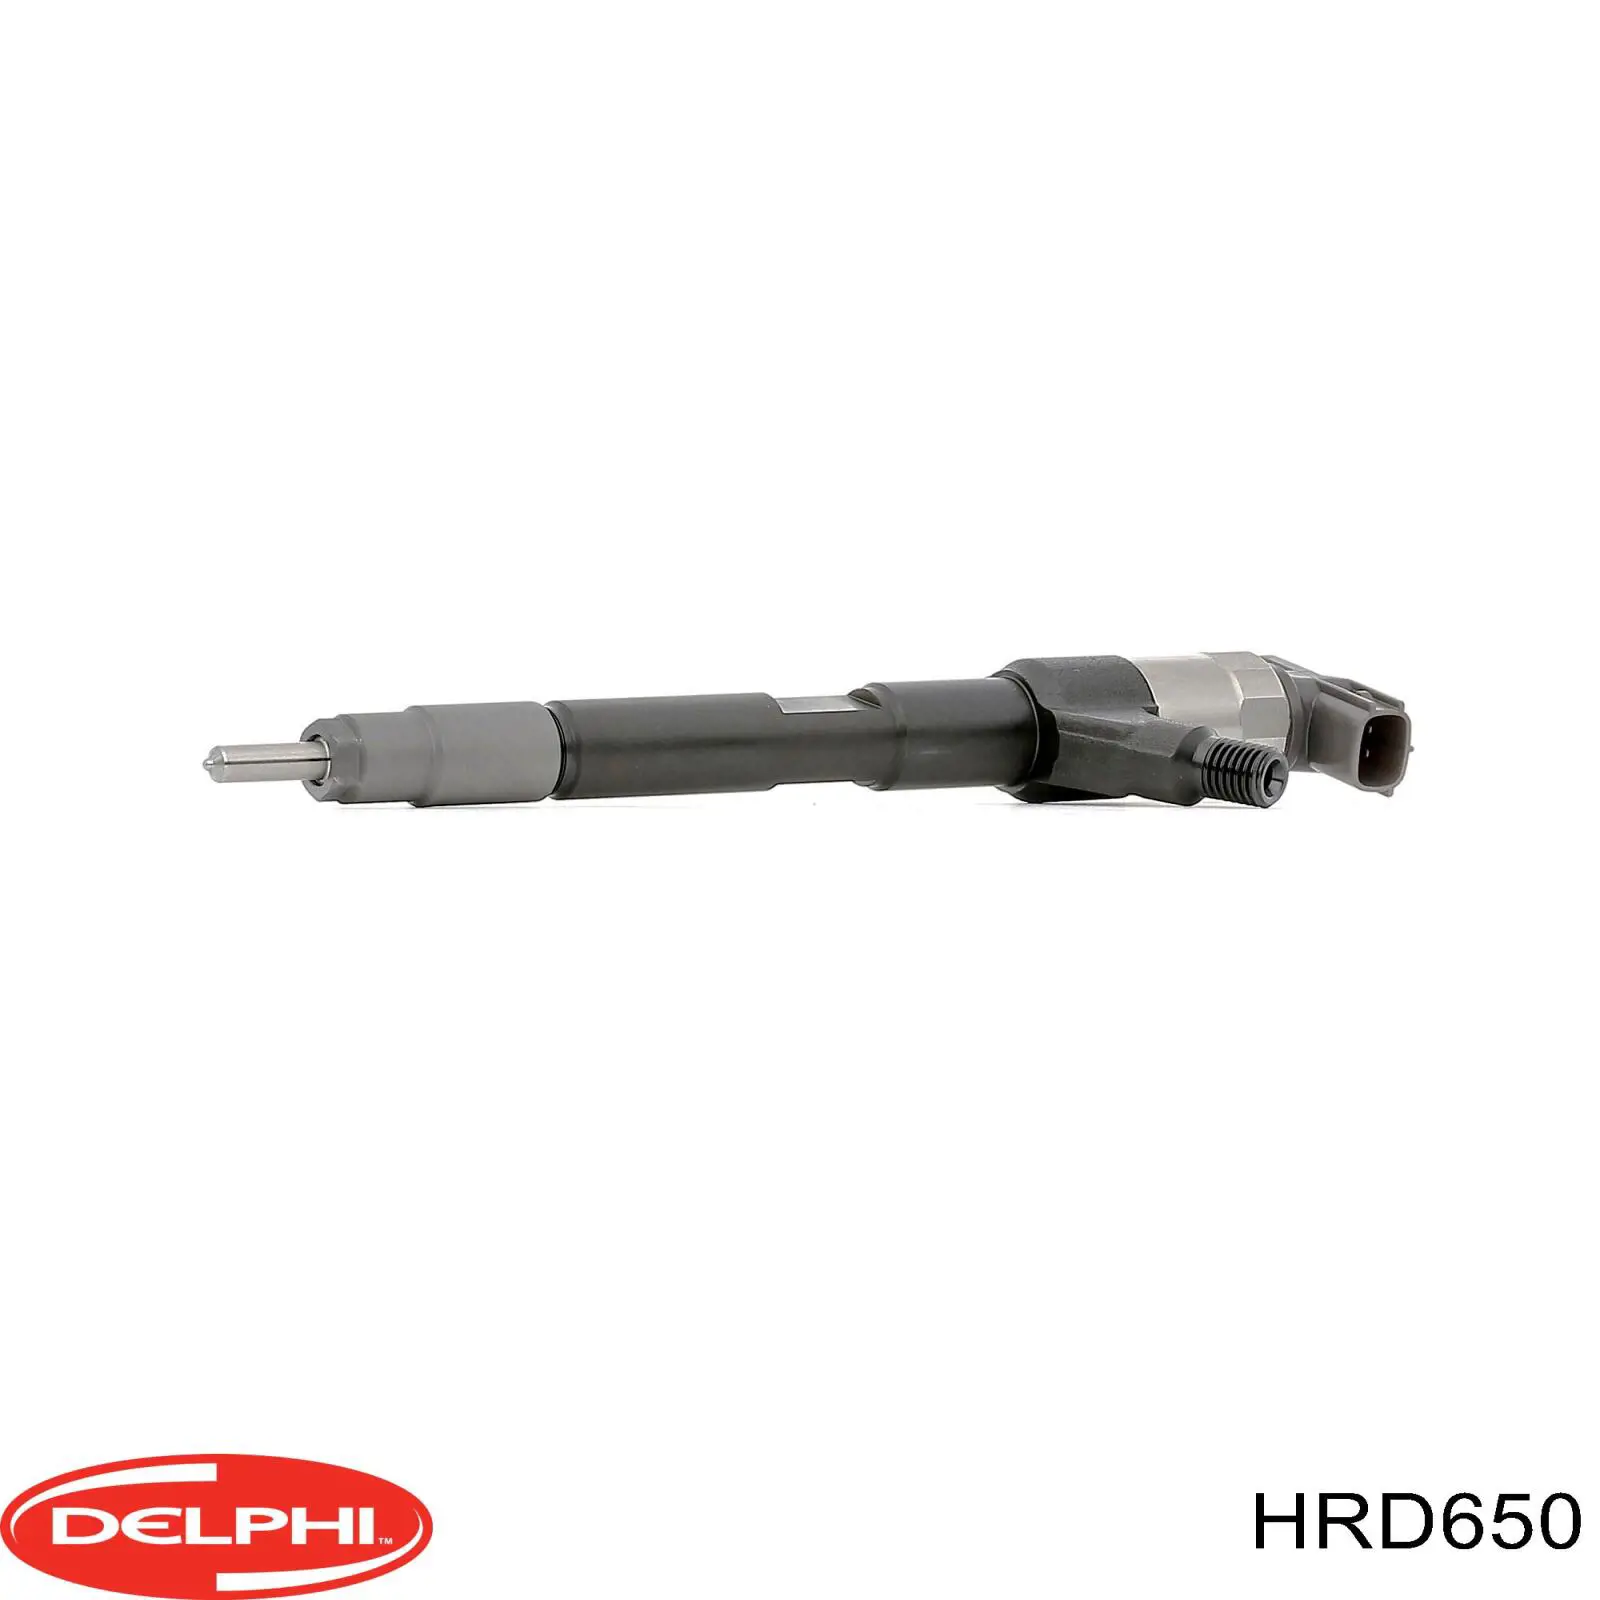 HRD650 Delphi injetor de injeção de combustível